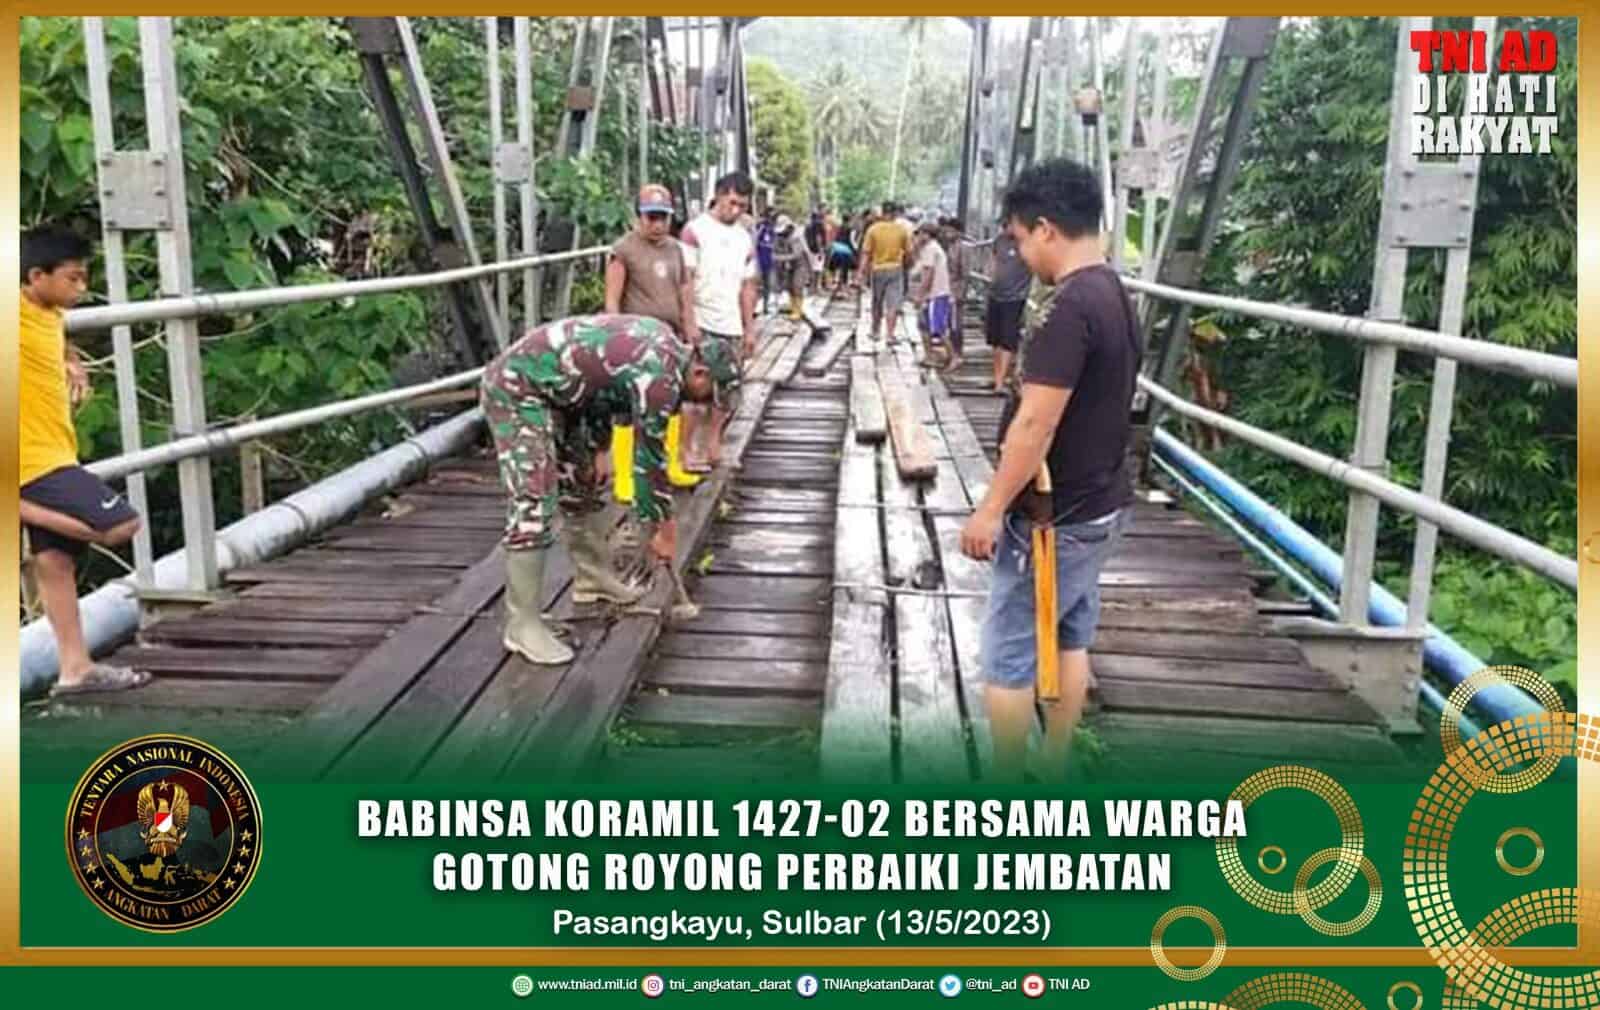 Babinsa Koramil 1427-02 Bersama Warga Gotong Royong Perbaiki Jembatan